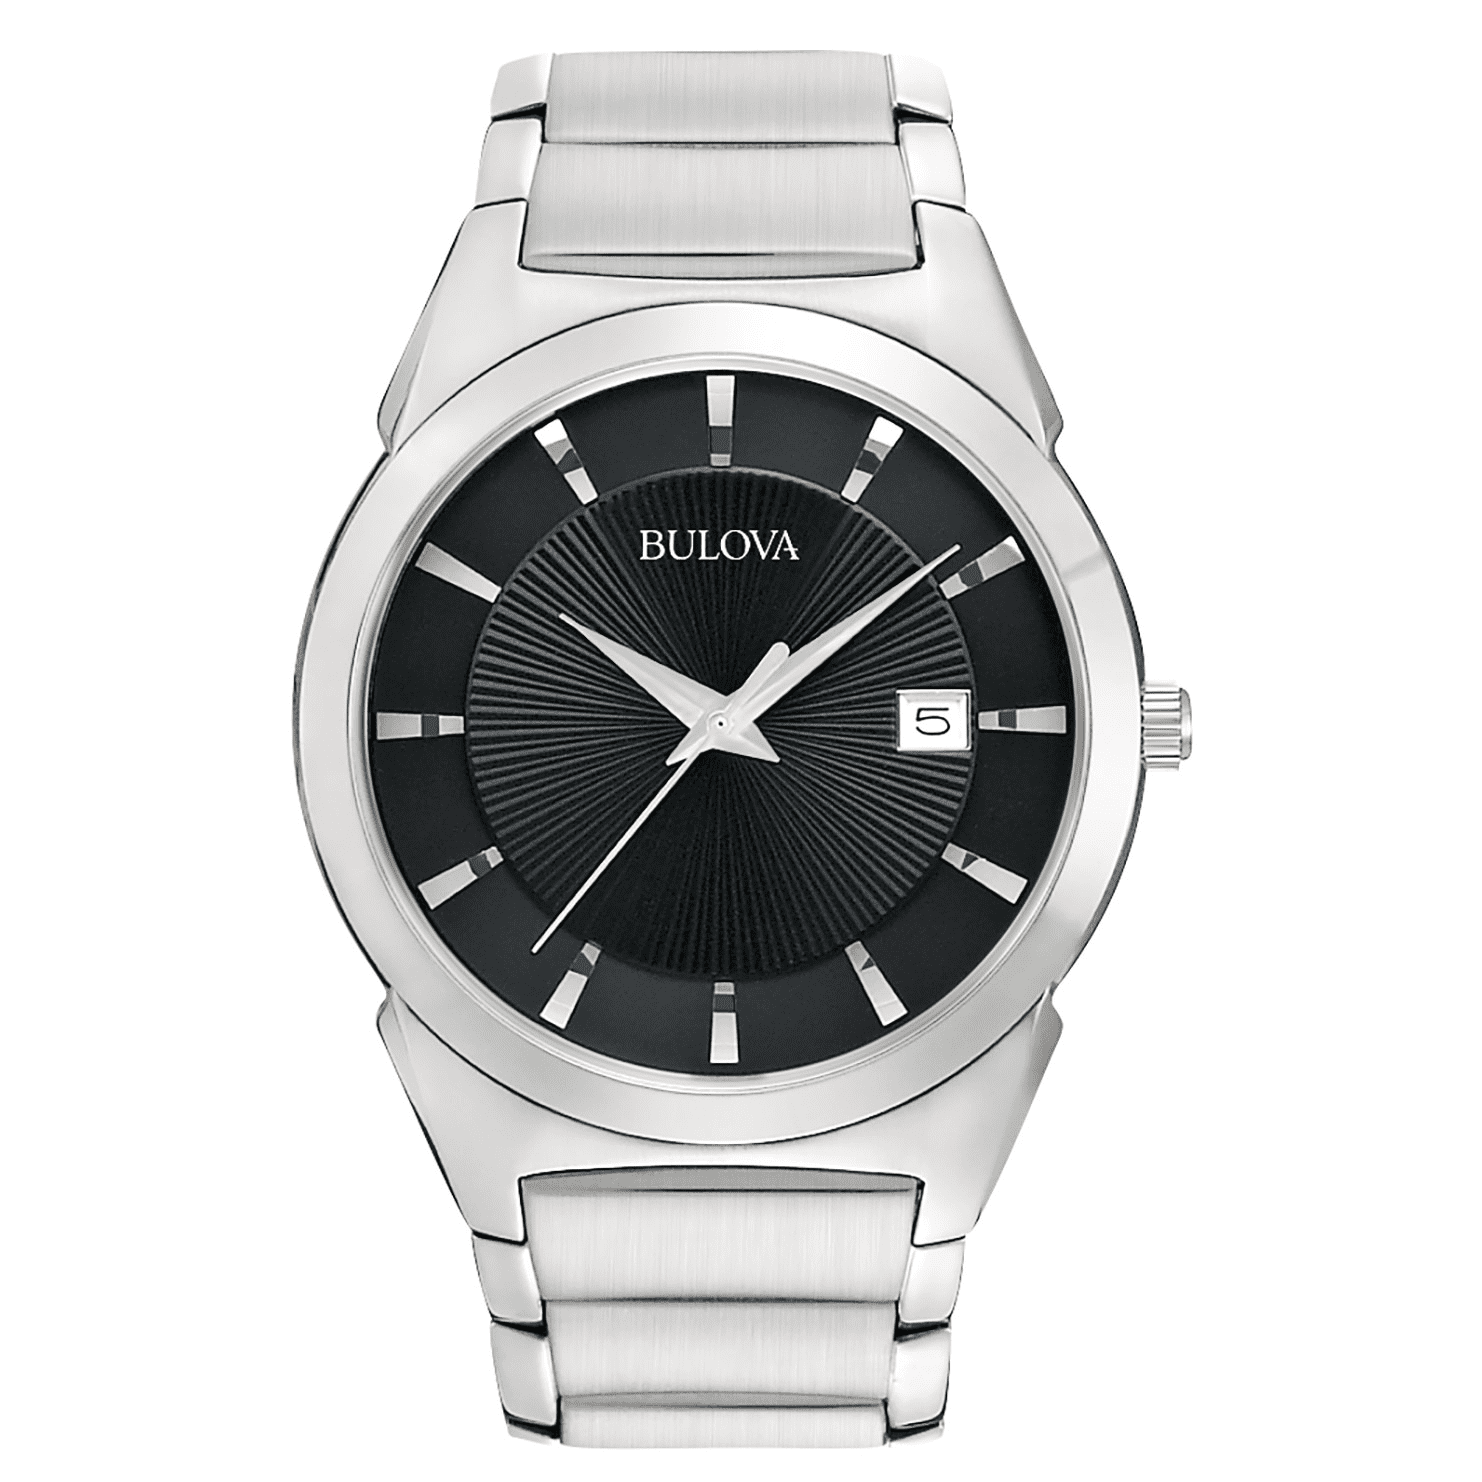 Bulova Men's Classic Stainless Steel Silver-Tone Watch 96B220 